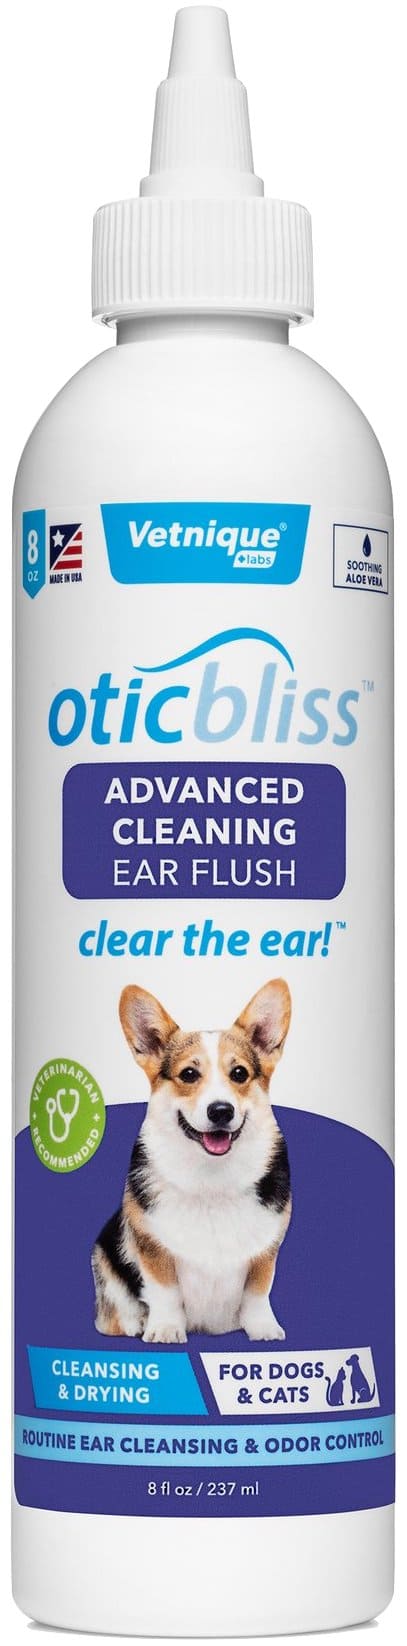 Oticbliss Advanced Cleaning Ear Flush